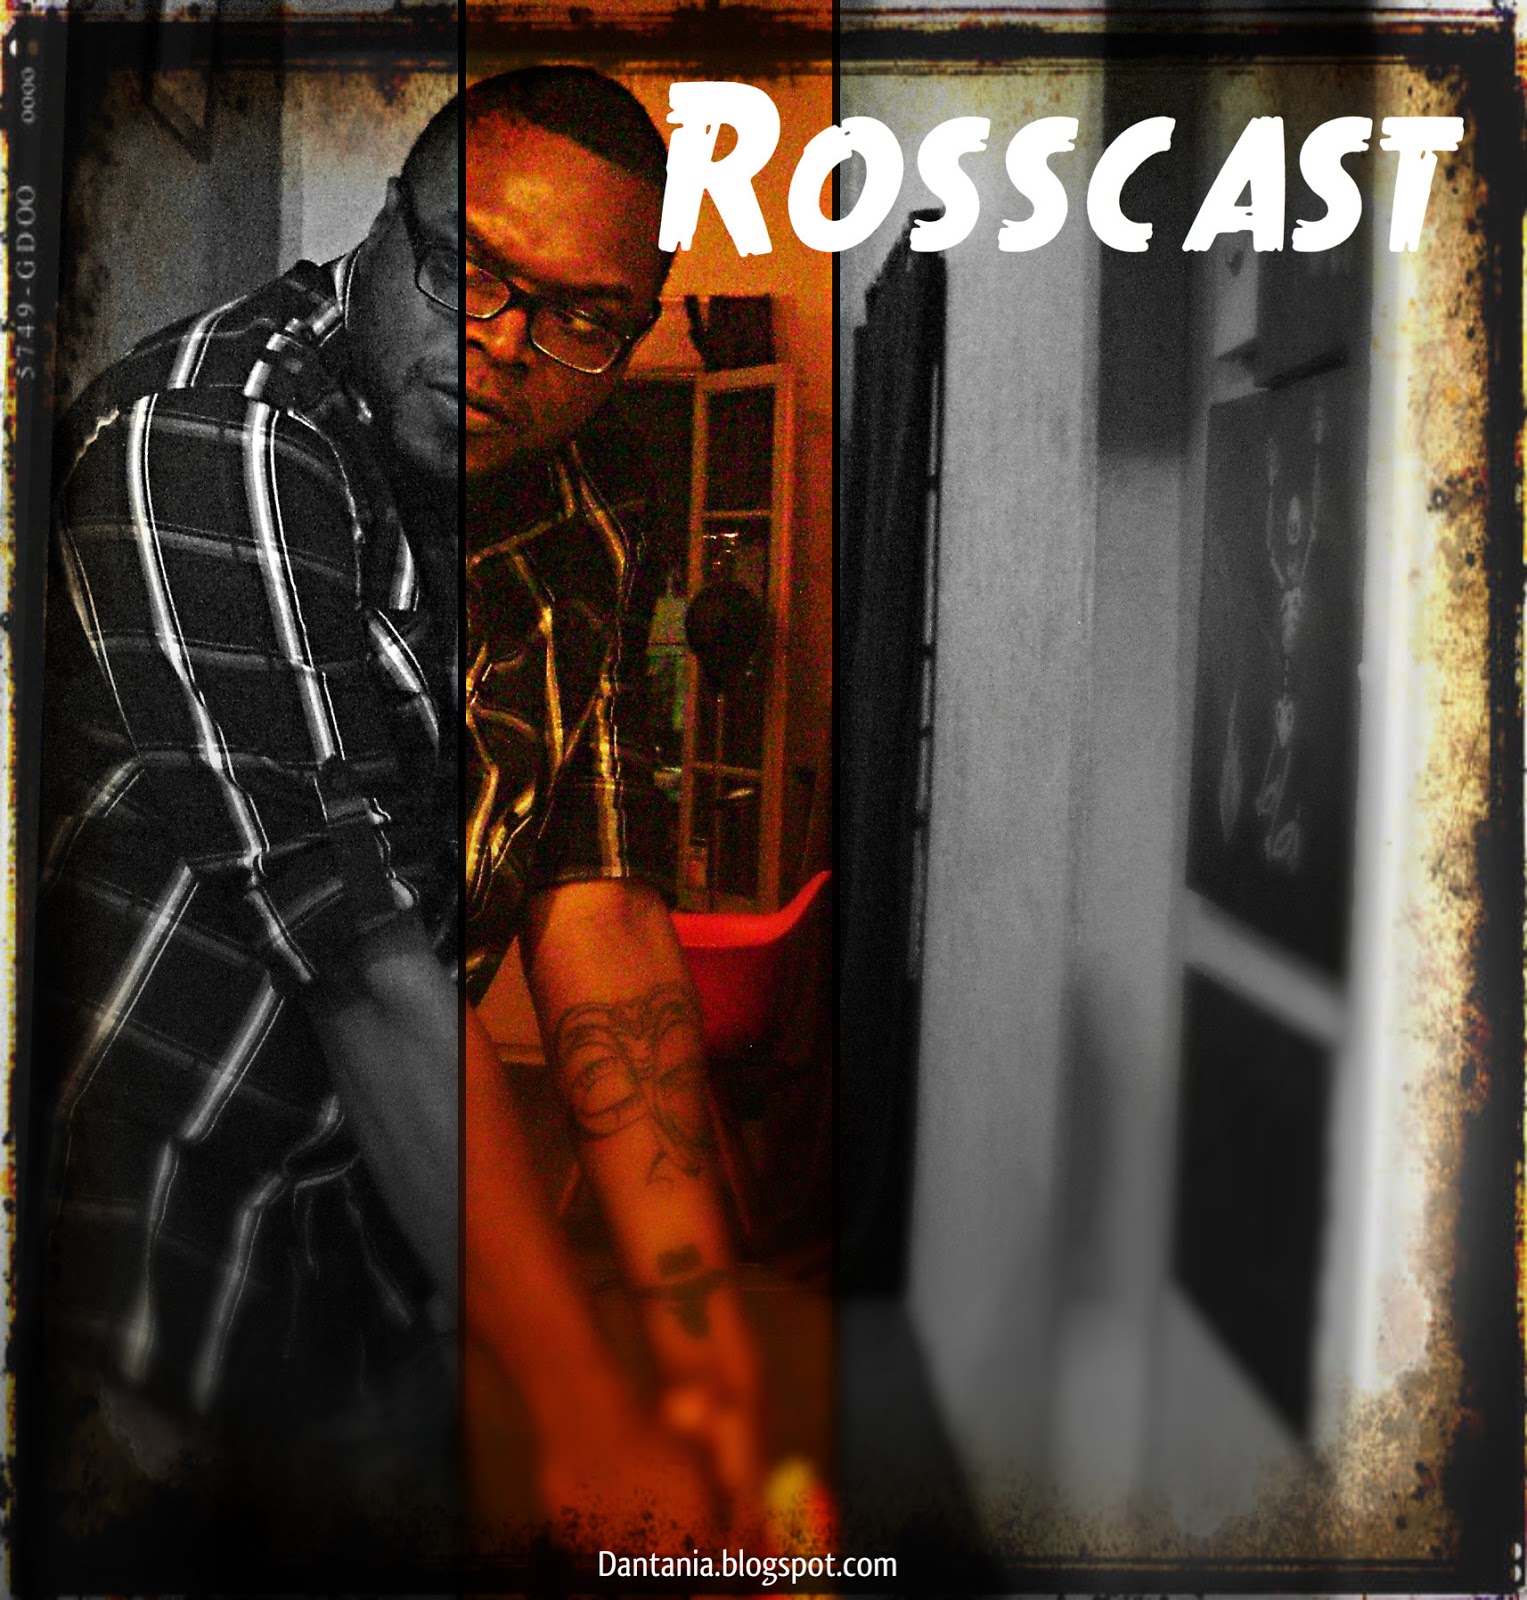 Rosscast Episode 268